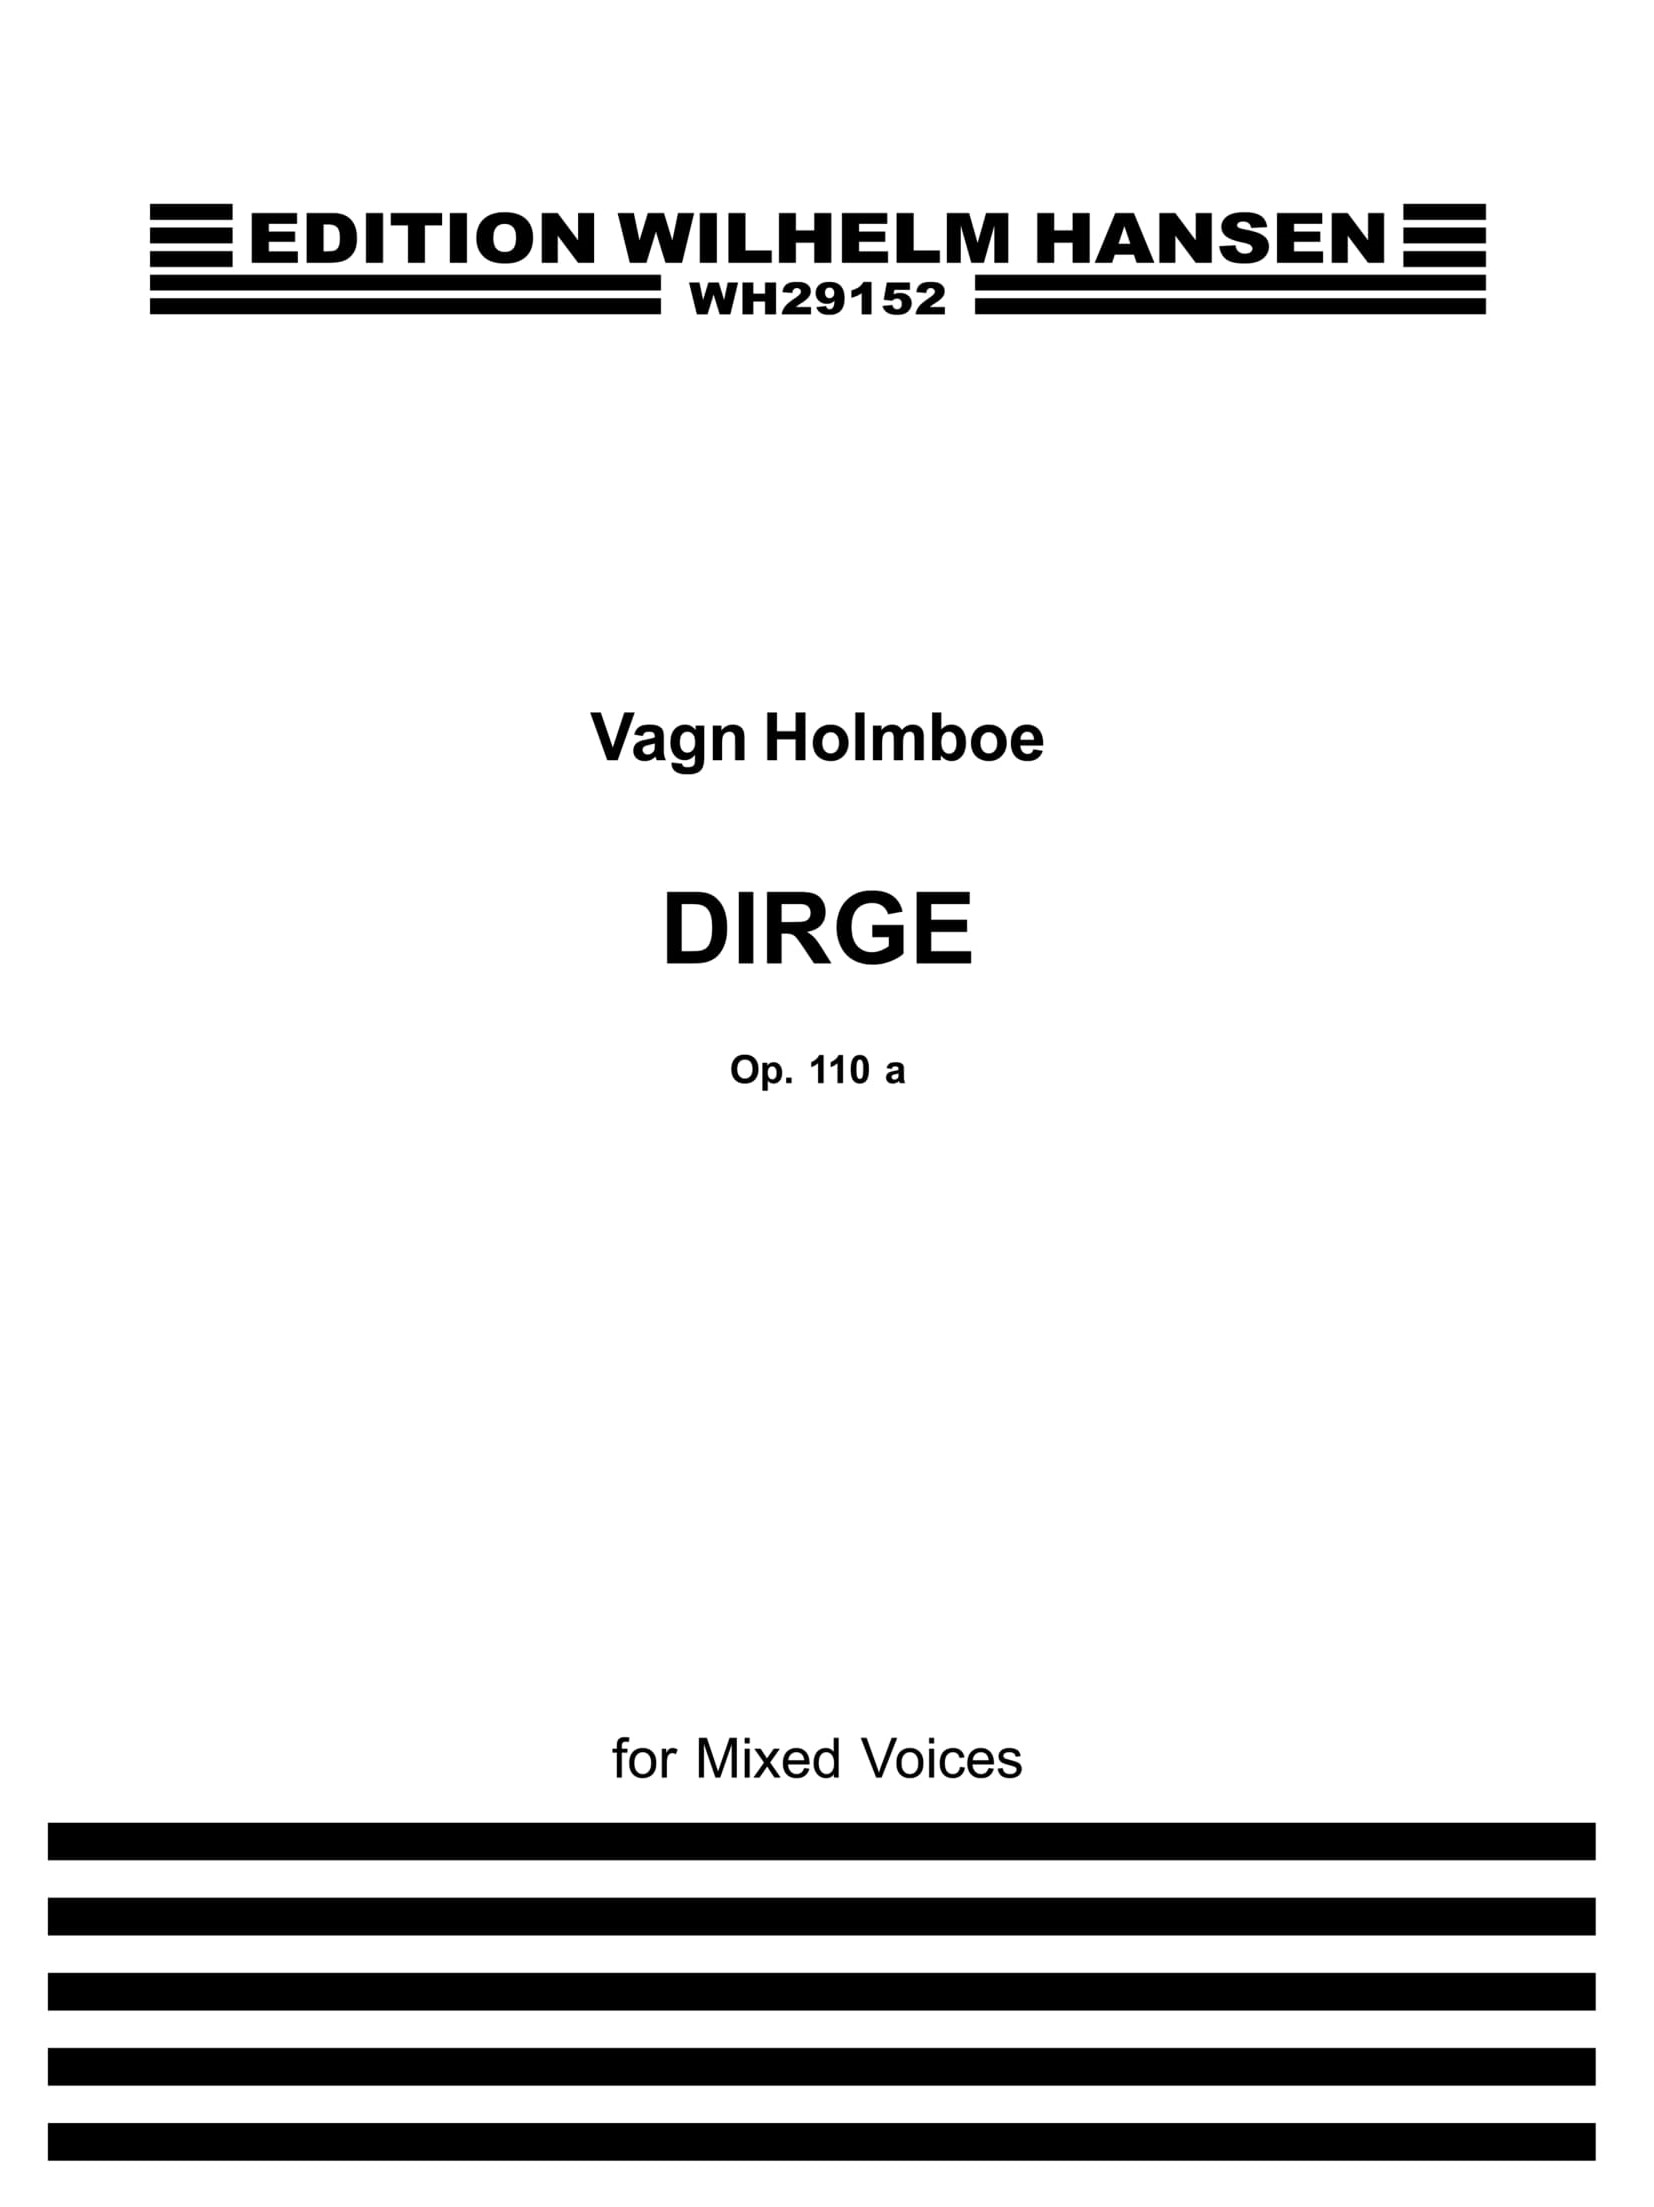 Vagn Holmboe: A Lyke-Wake Dirge - A Border Ballad Op. 110a: SATB: Vocal Score